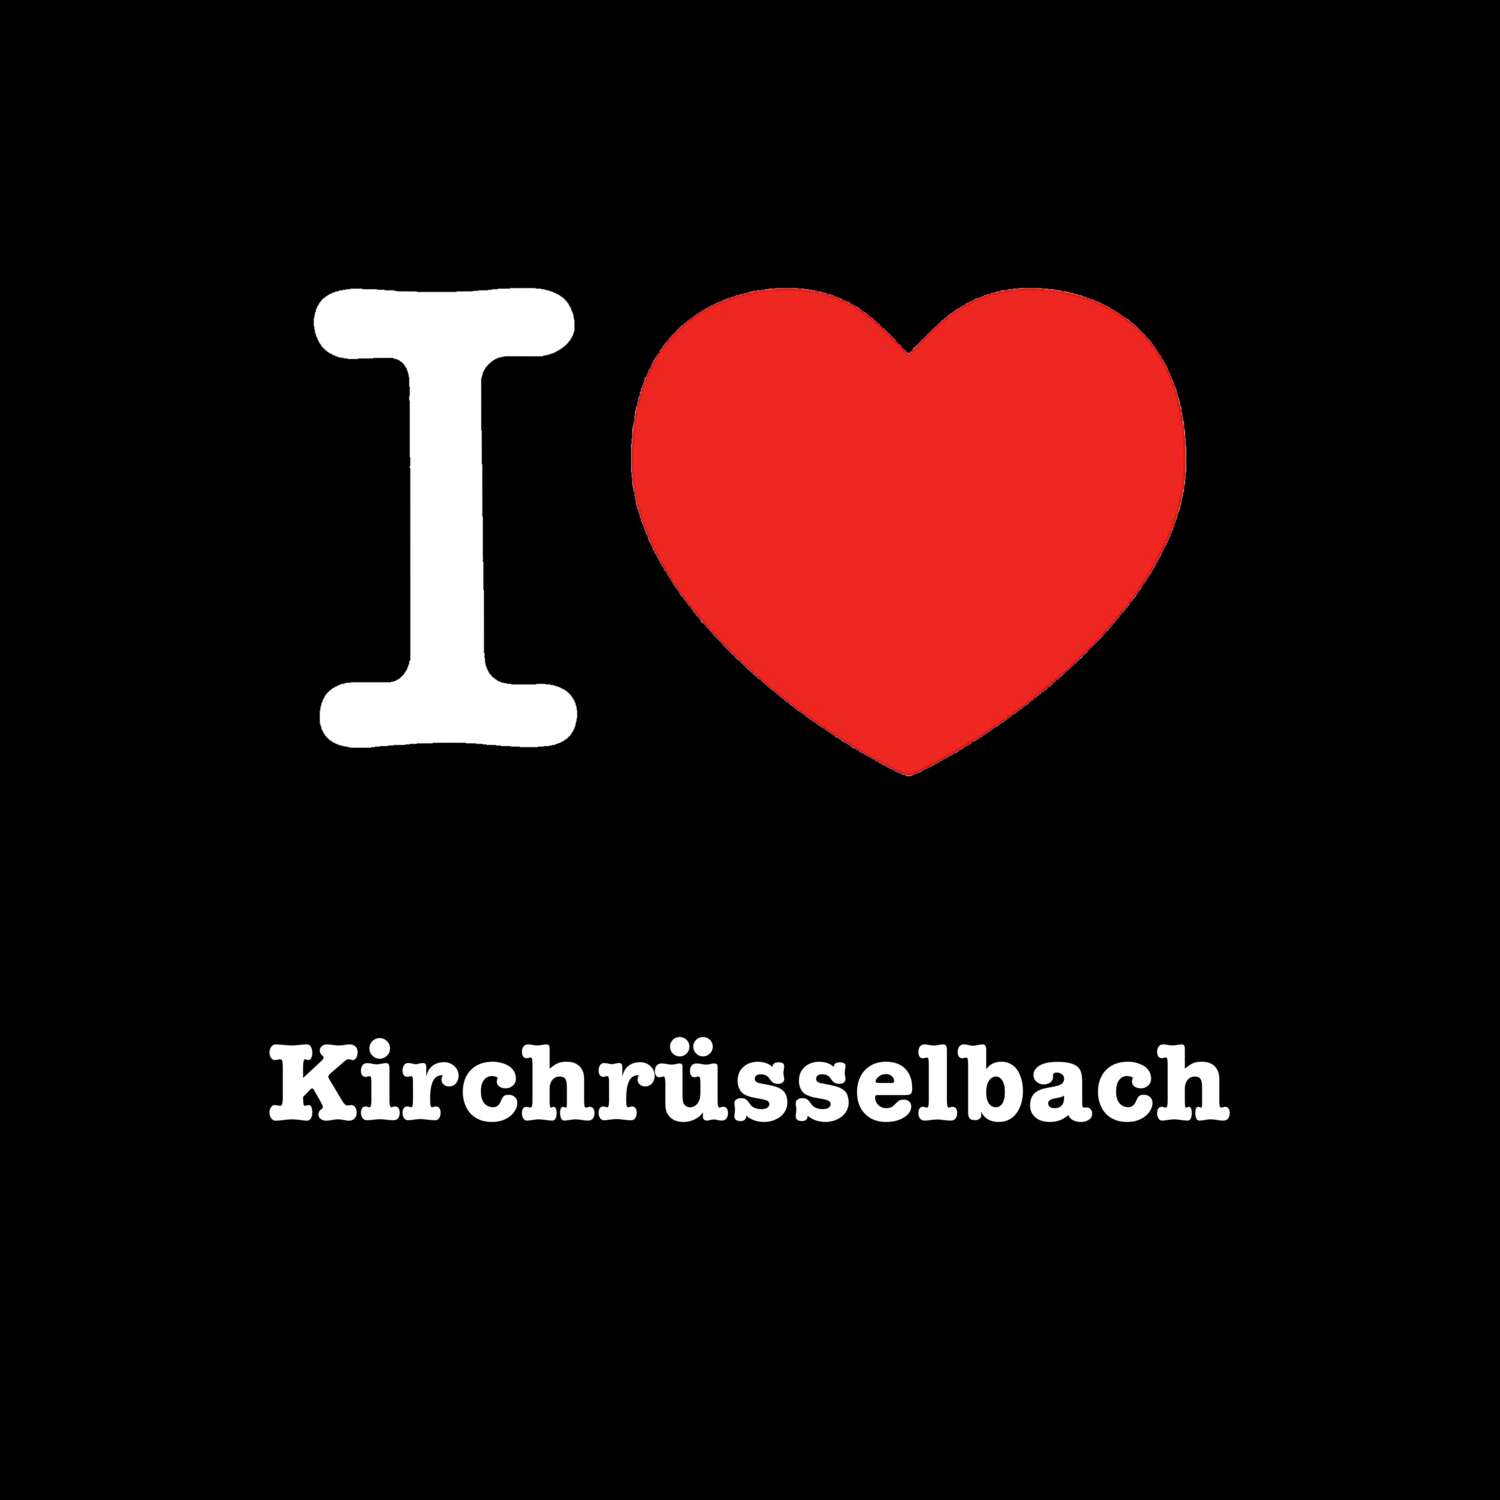 Kirchrüsselbach T-Shirt »I love«